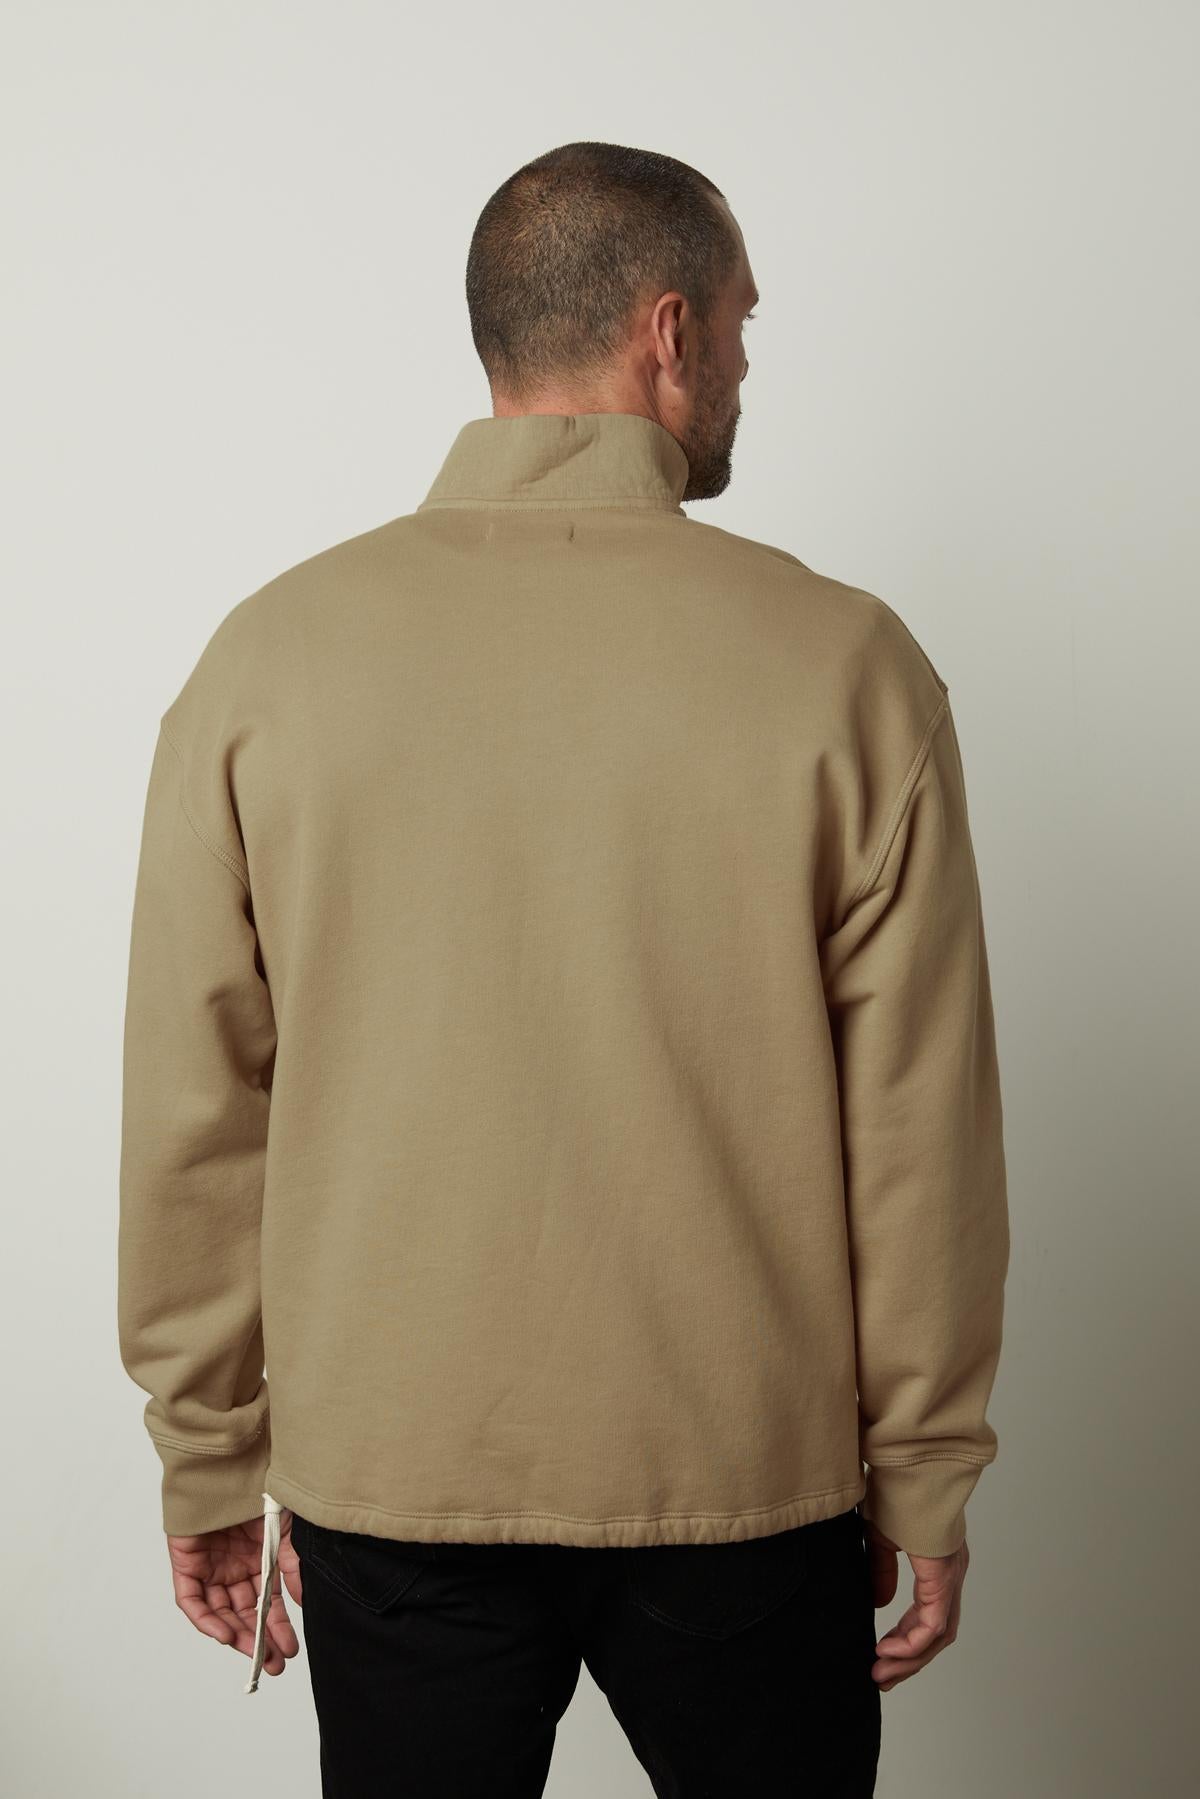 The back view of a man wearing a Velvet by Graham & Spencer BOSCO QUARTER-ZIP SWEATSHIRT made of soft brushed fleece.-35547515224257